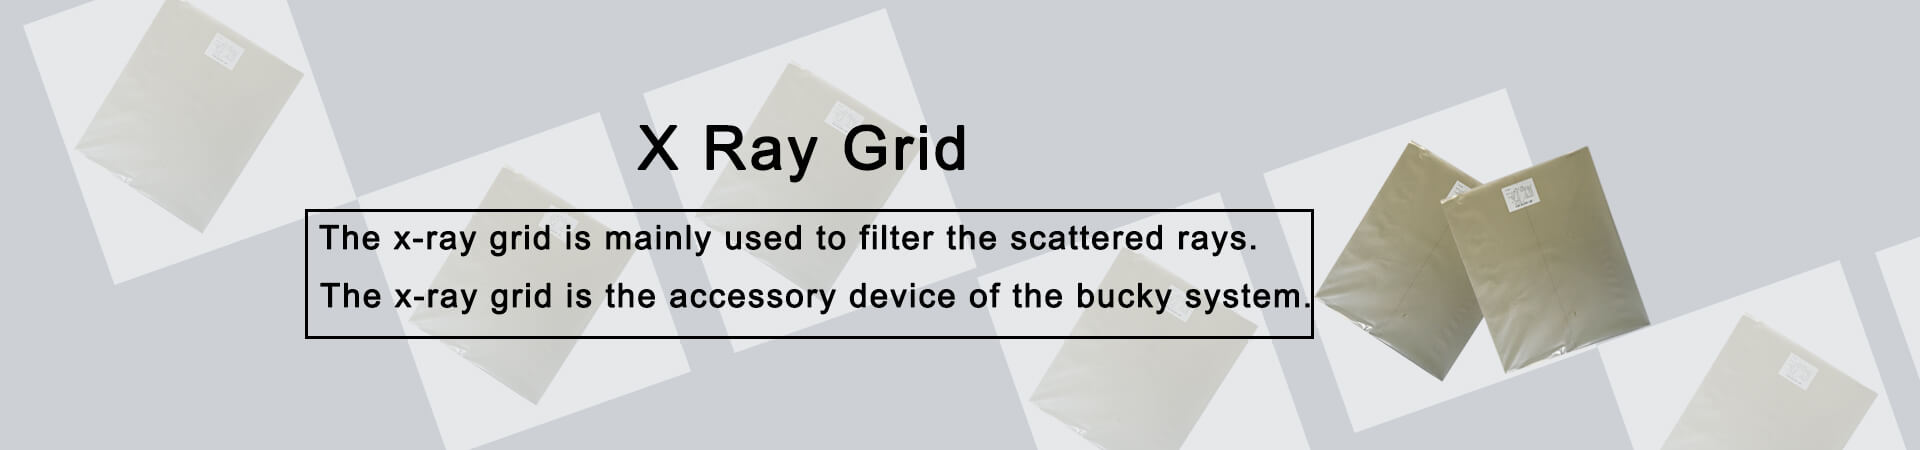 X-ray grid 1920PX*450PX